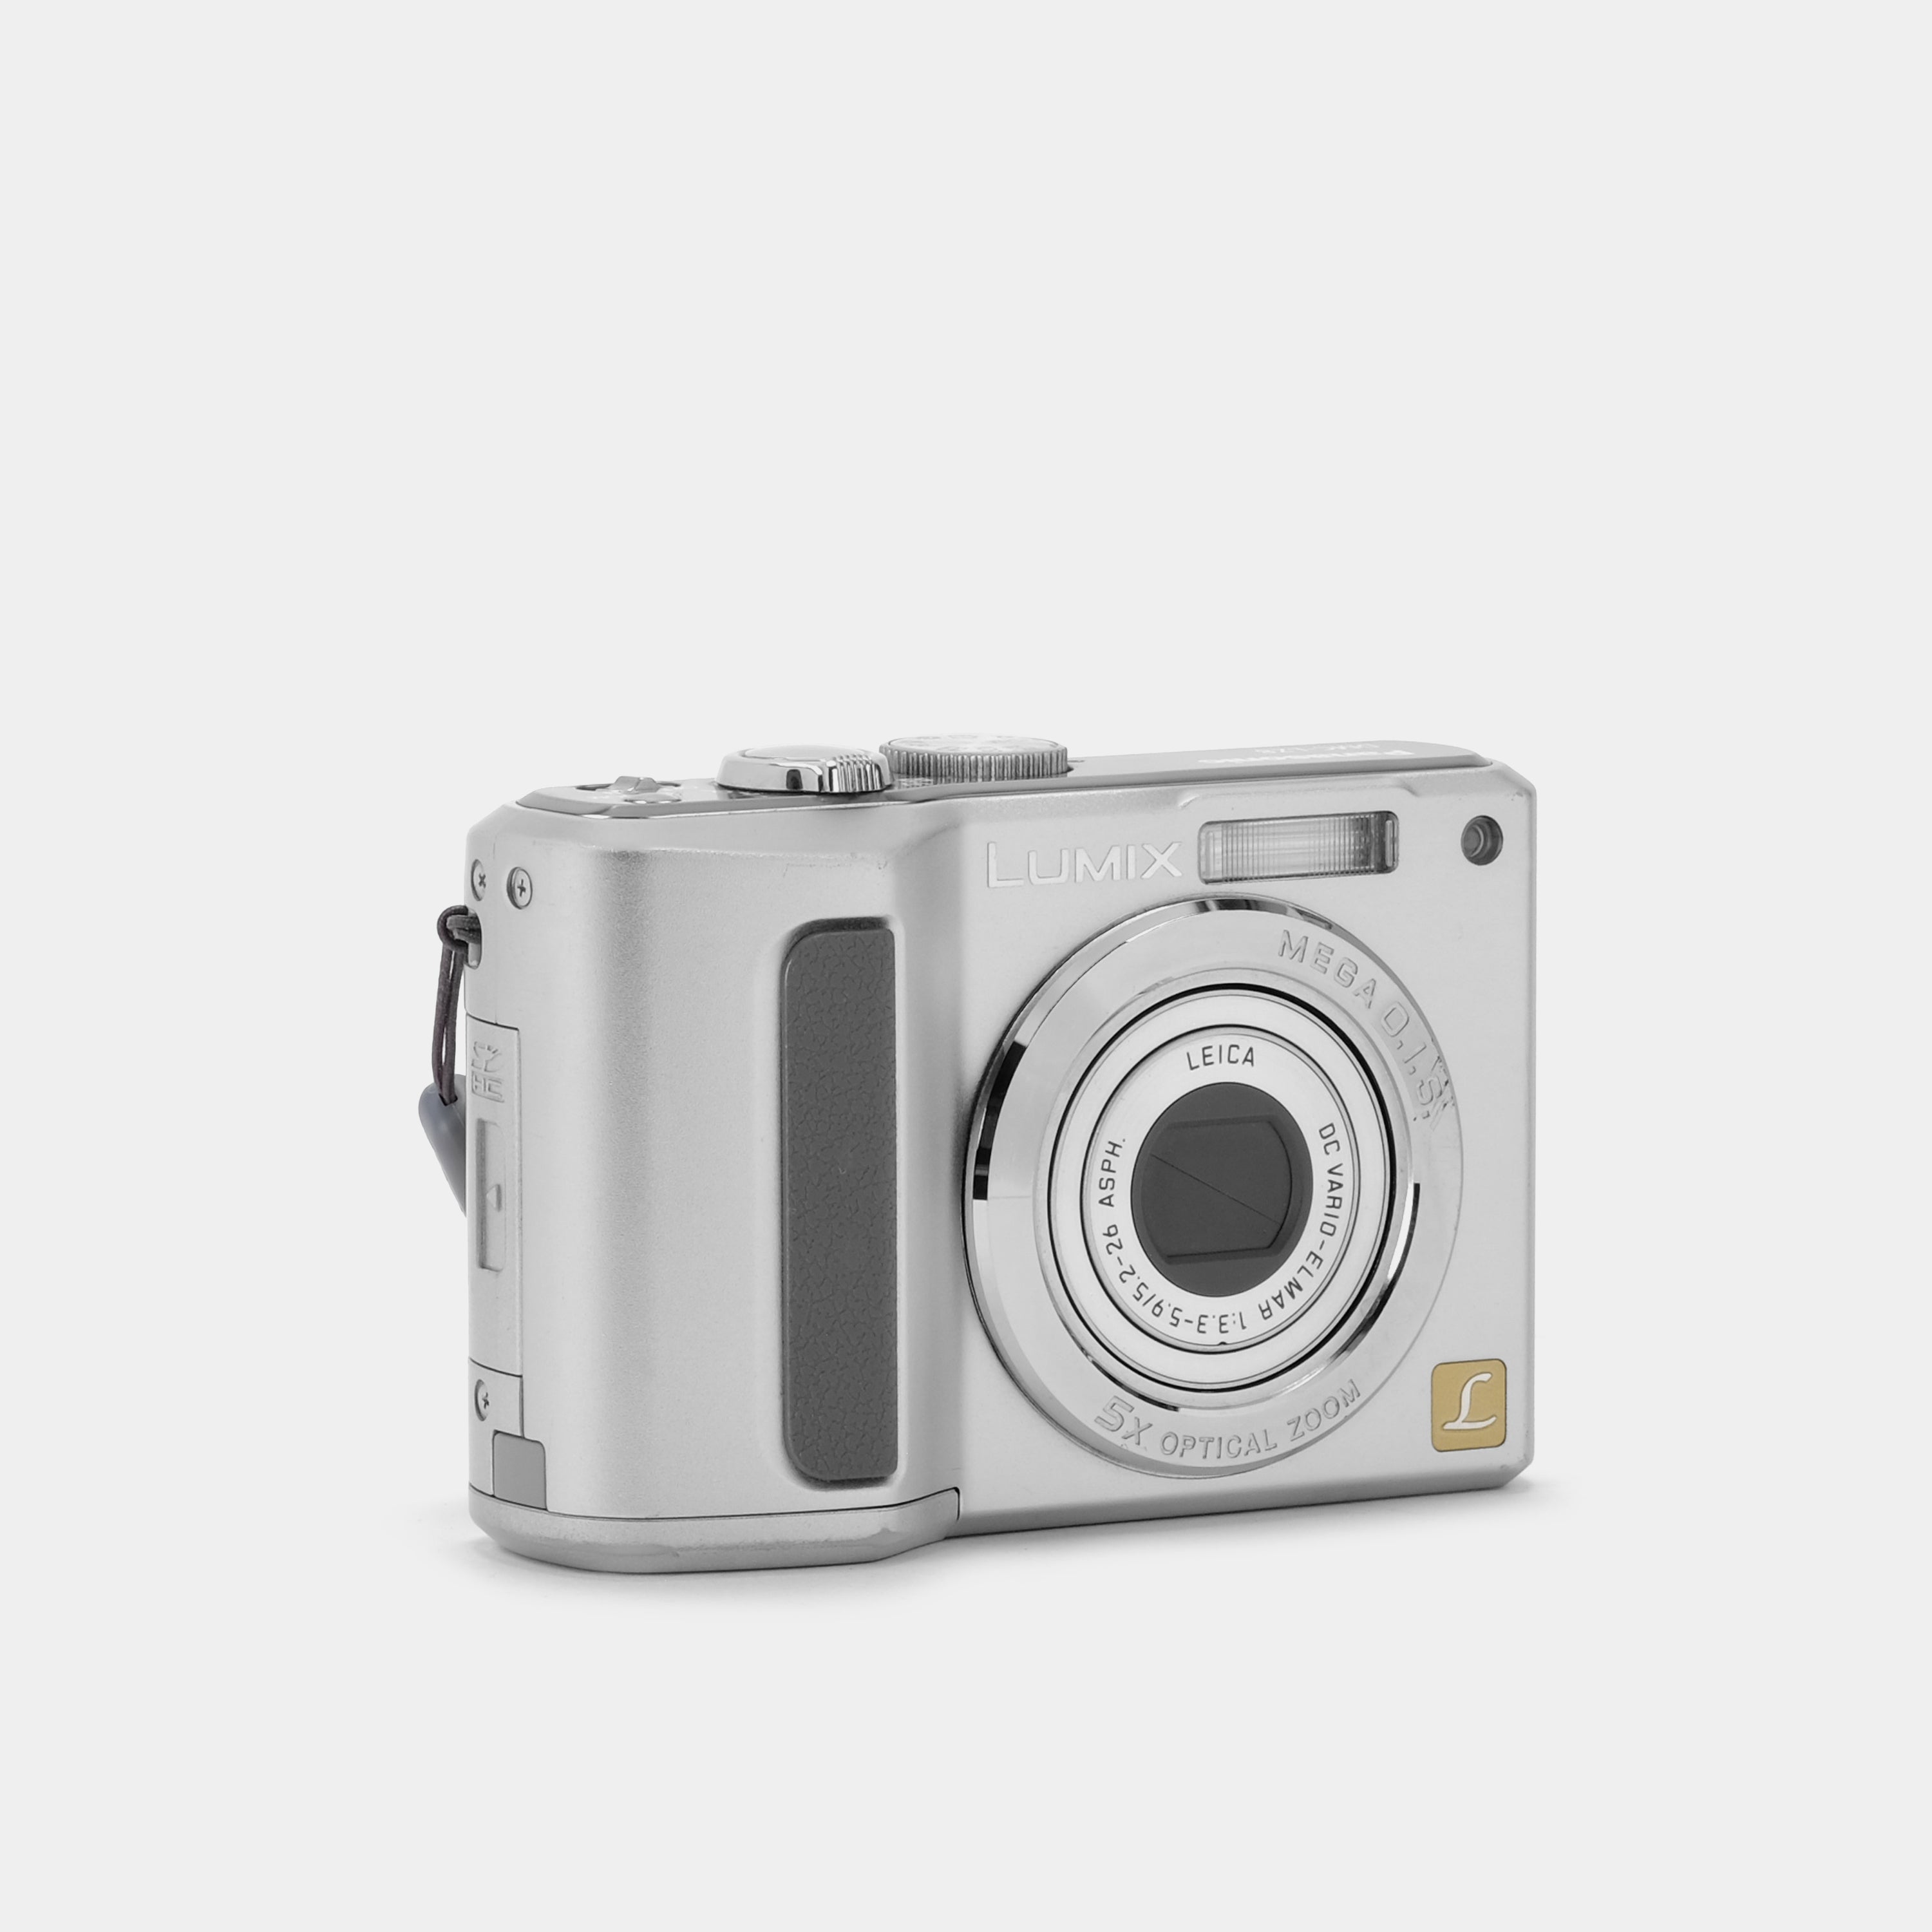 Panasonic Lumix DMC-LZ8 Silver Point and Shoot Digital Camera